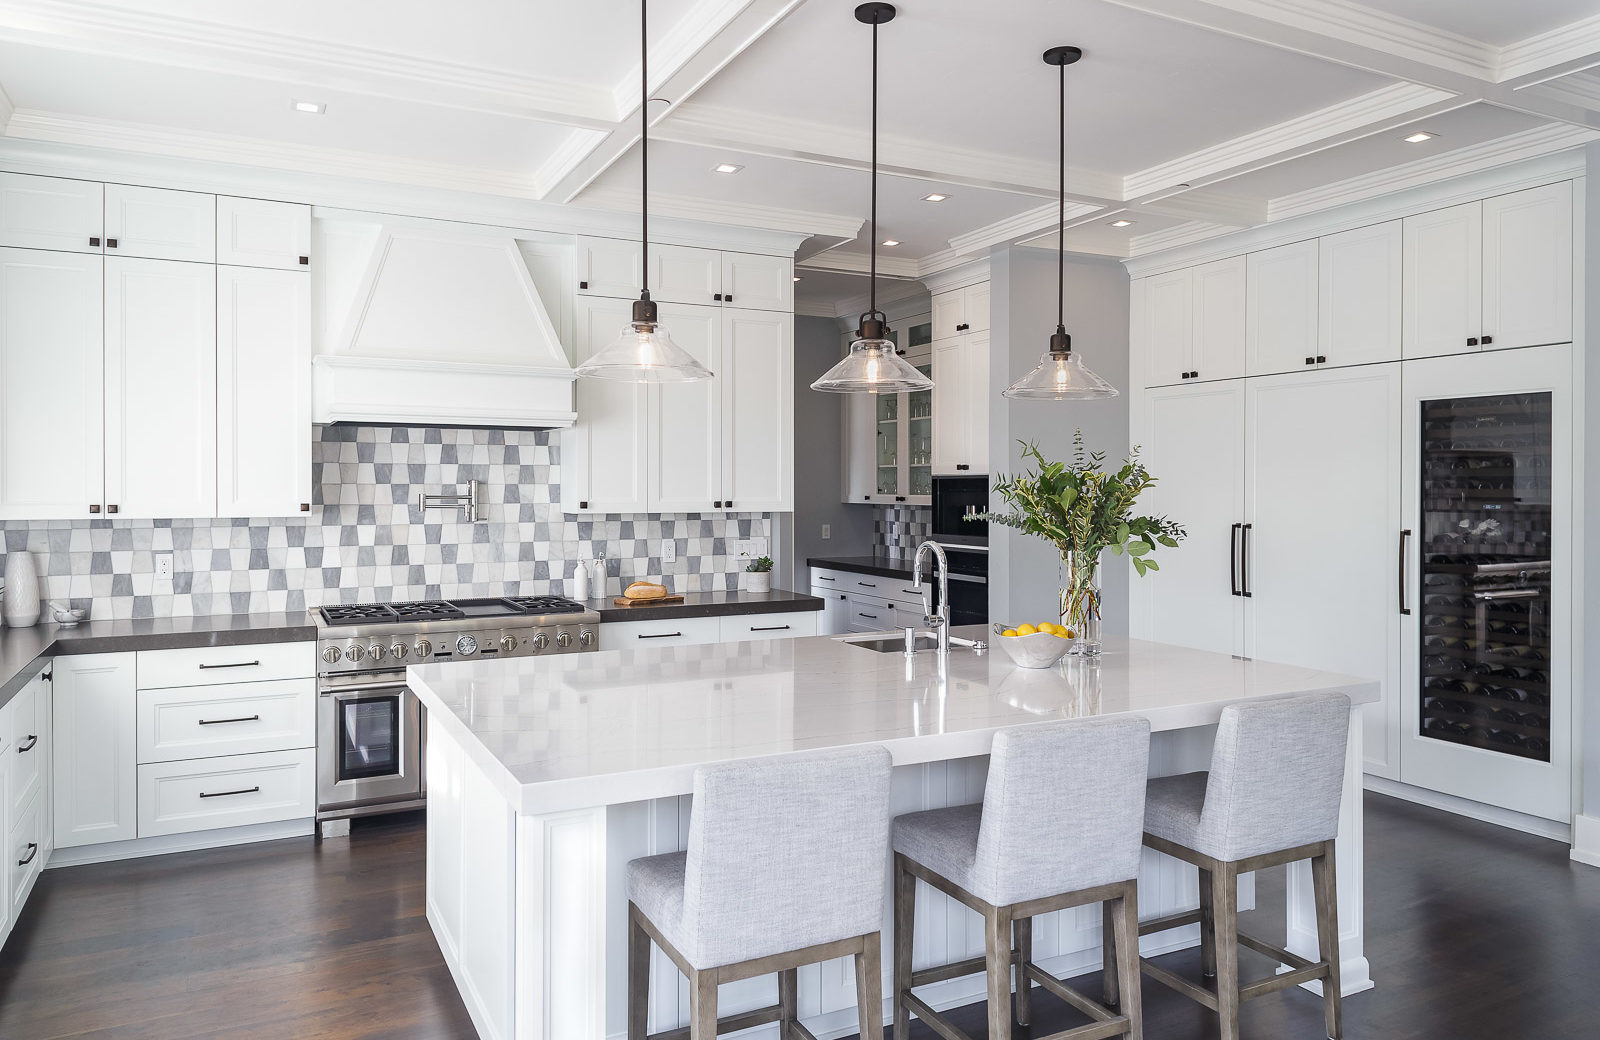 Large open plan kitchen with large island, quartz countertops, white painted cabinets, tile backsplash